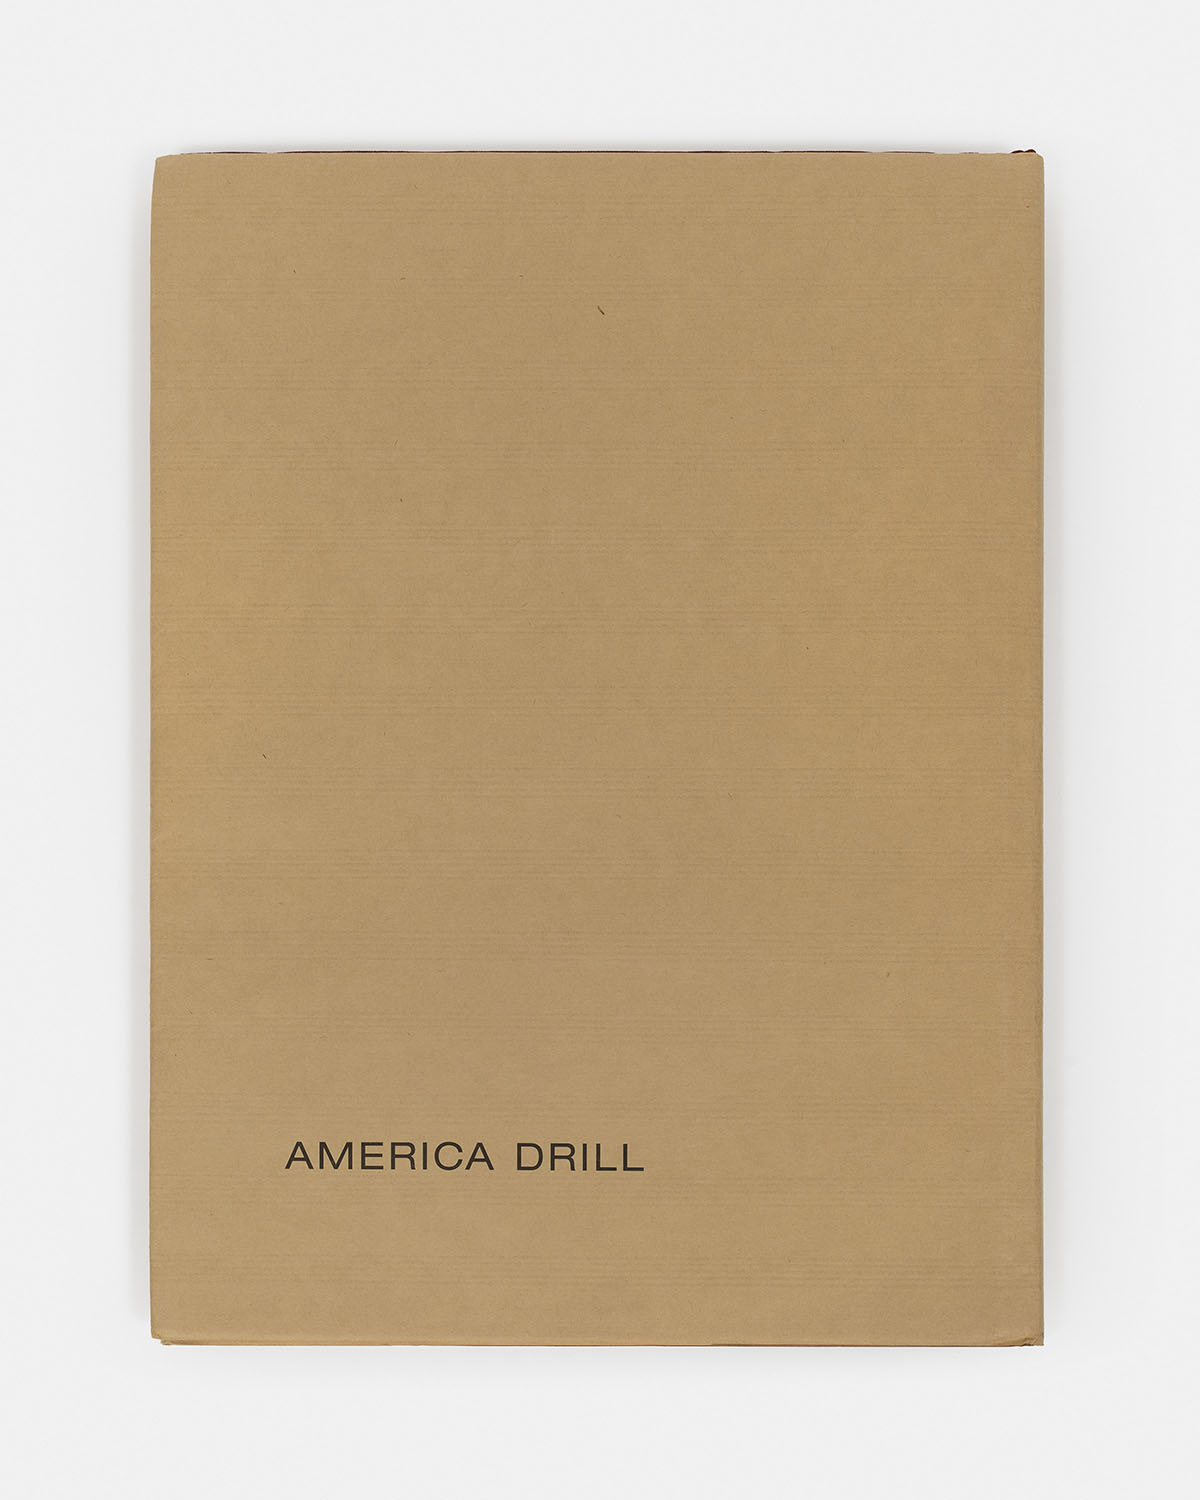 Carl Andre - America Drill (signed), 1963/2003 - 